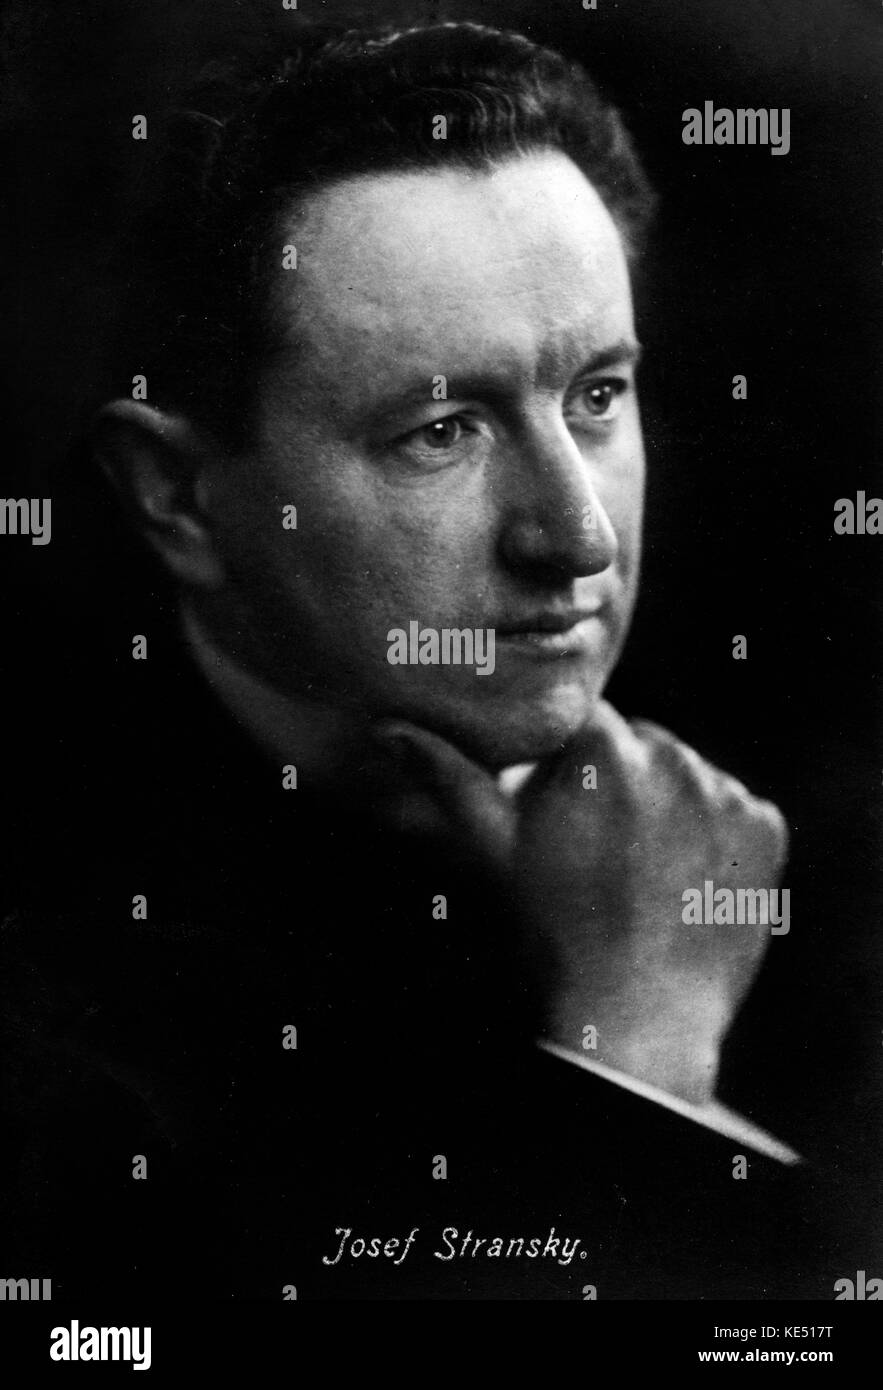 Josef Stransky - portrait of the Bohemian conductor, 1872-1936 Stock Photo